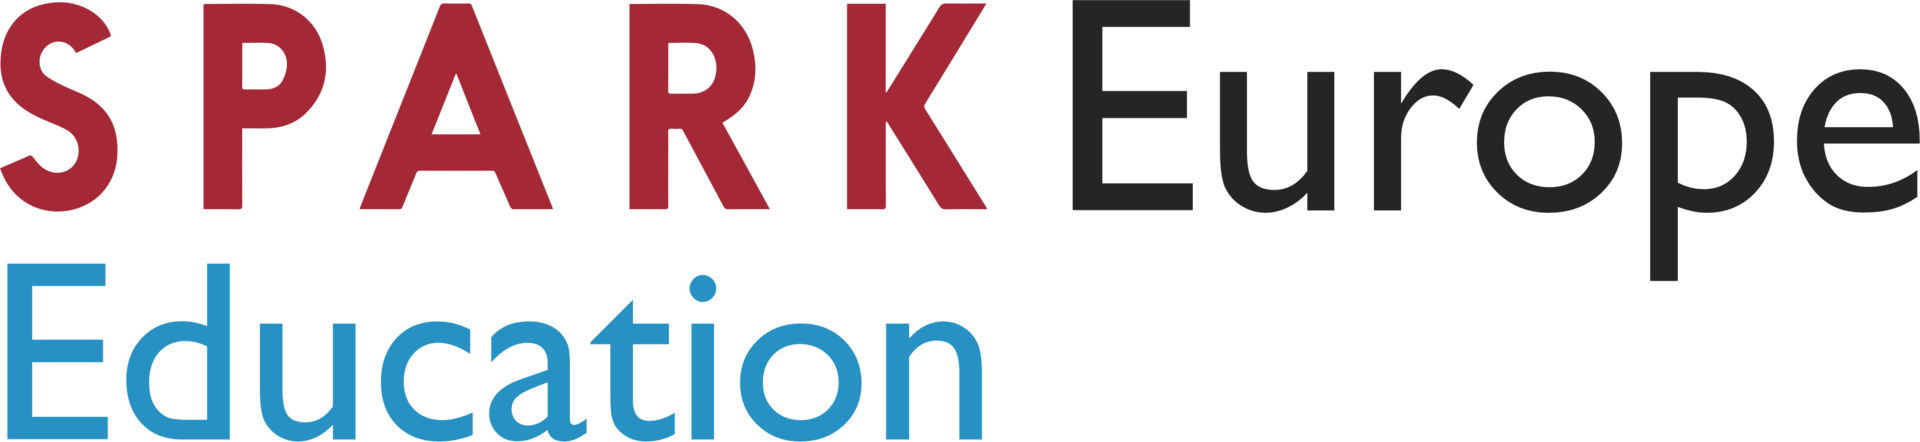 SPARK Europe logo